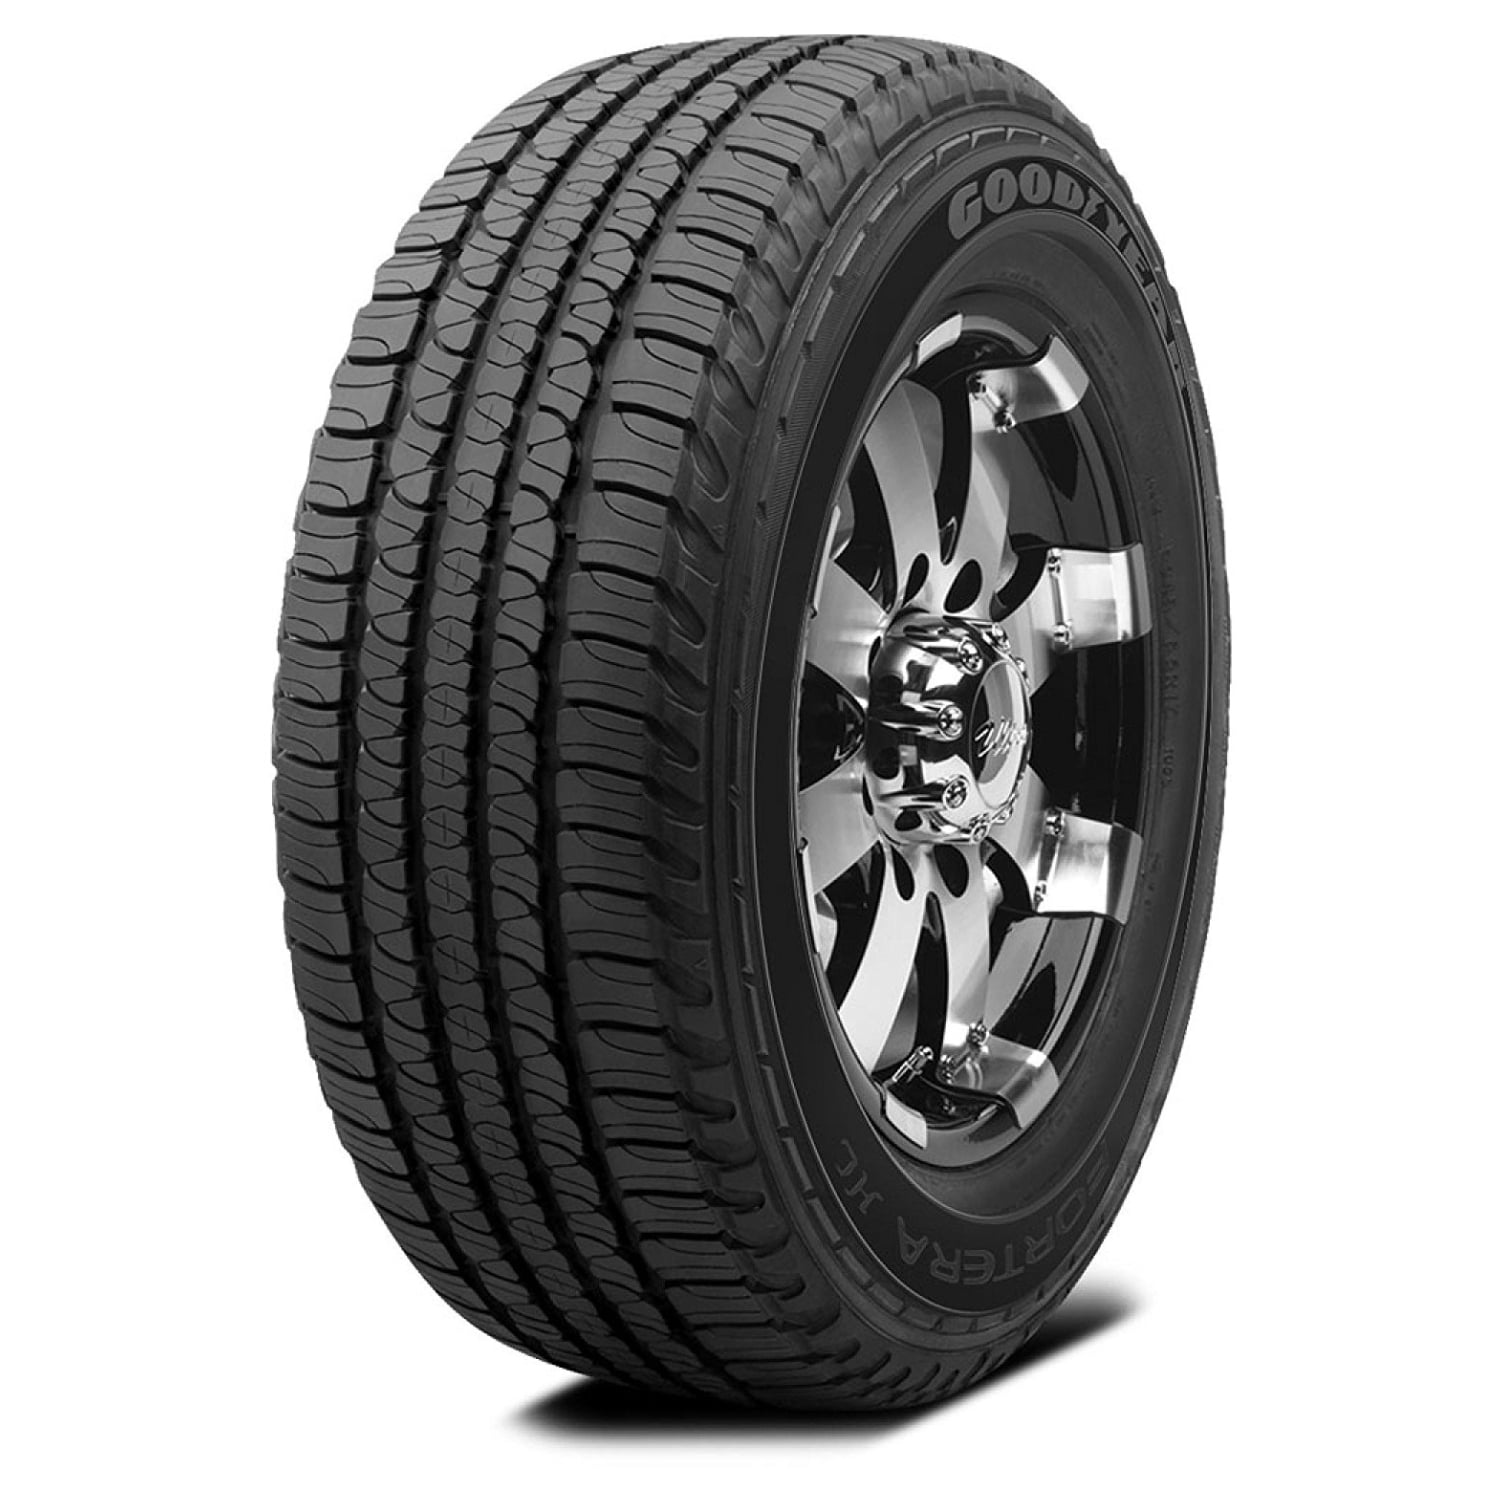 Goodyear Fortera HL 235/70R16 104 S Tire 